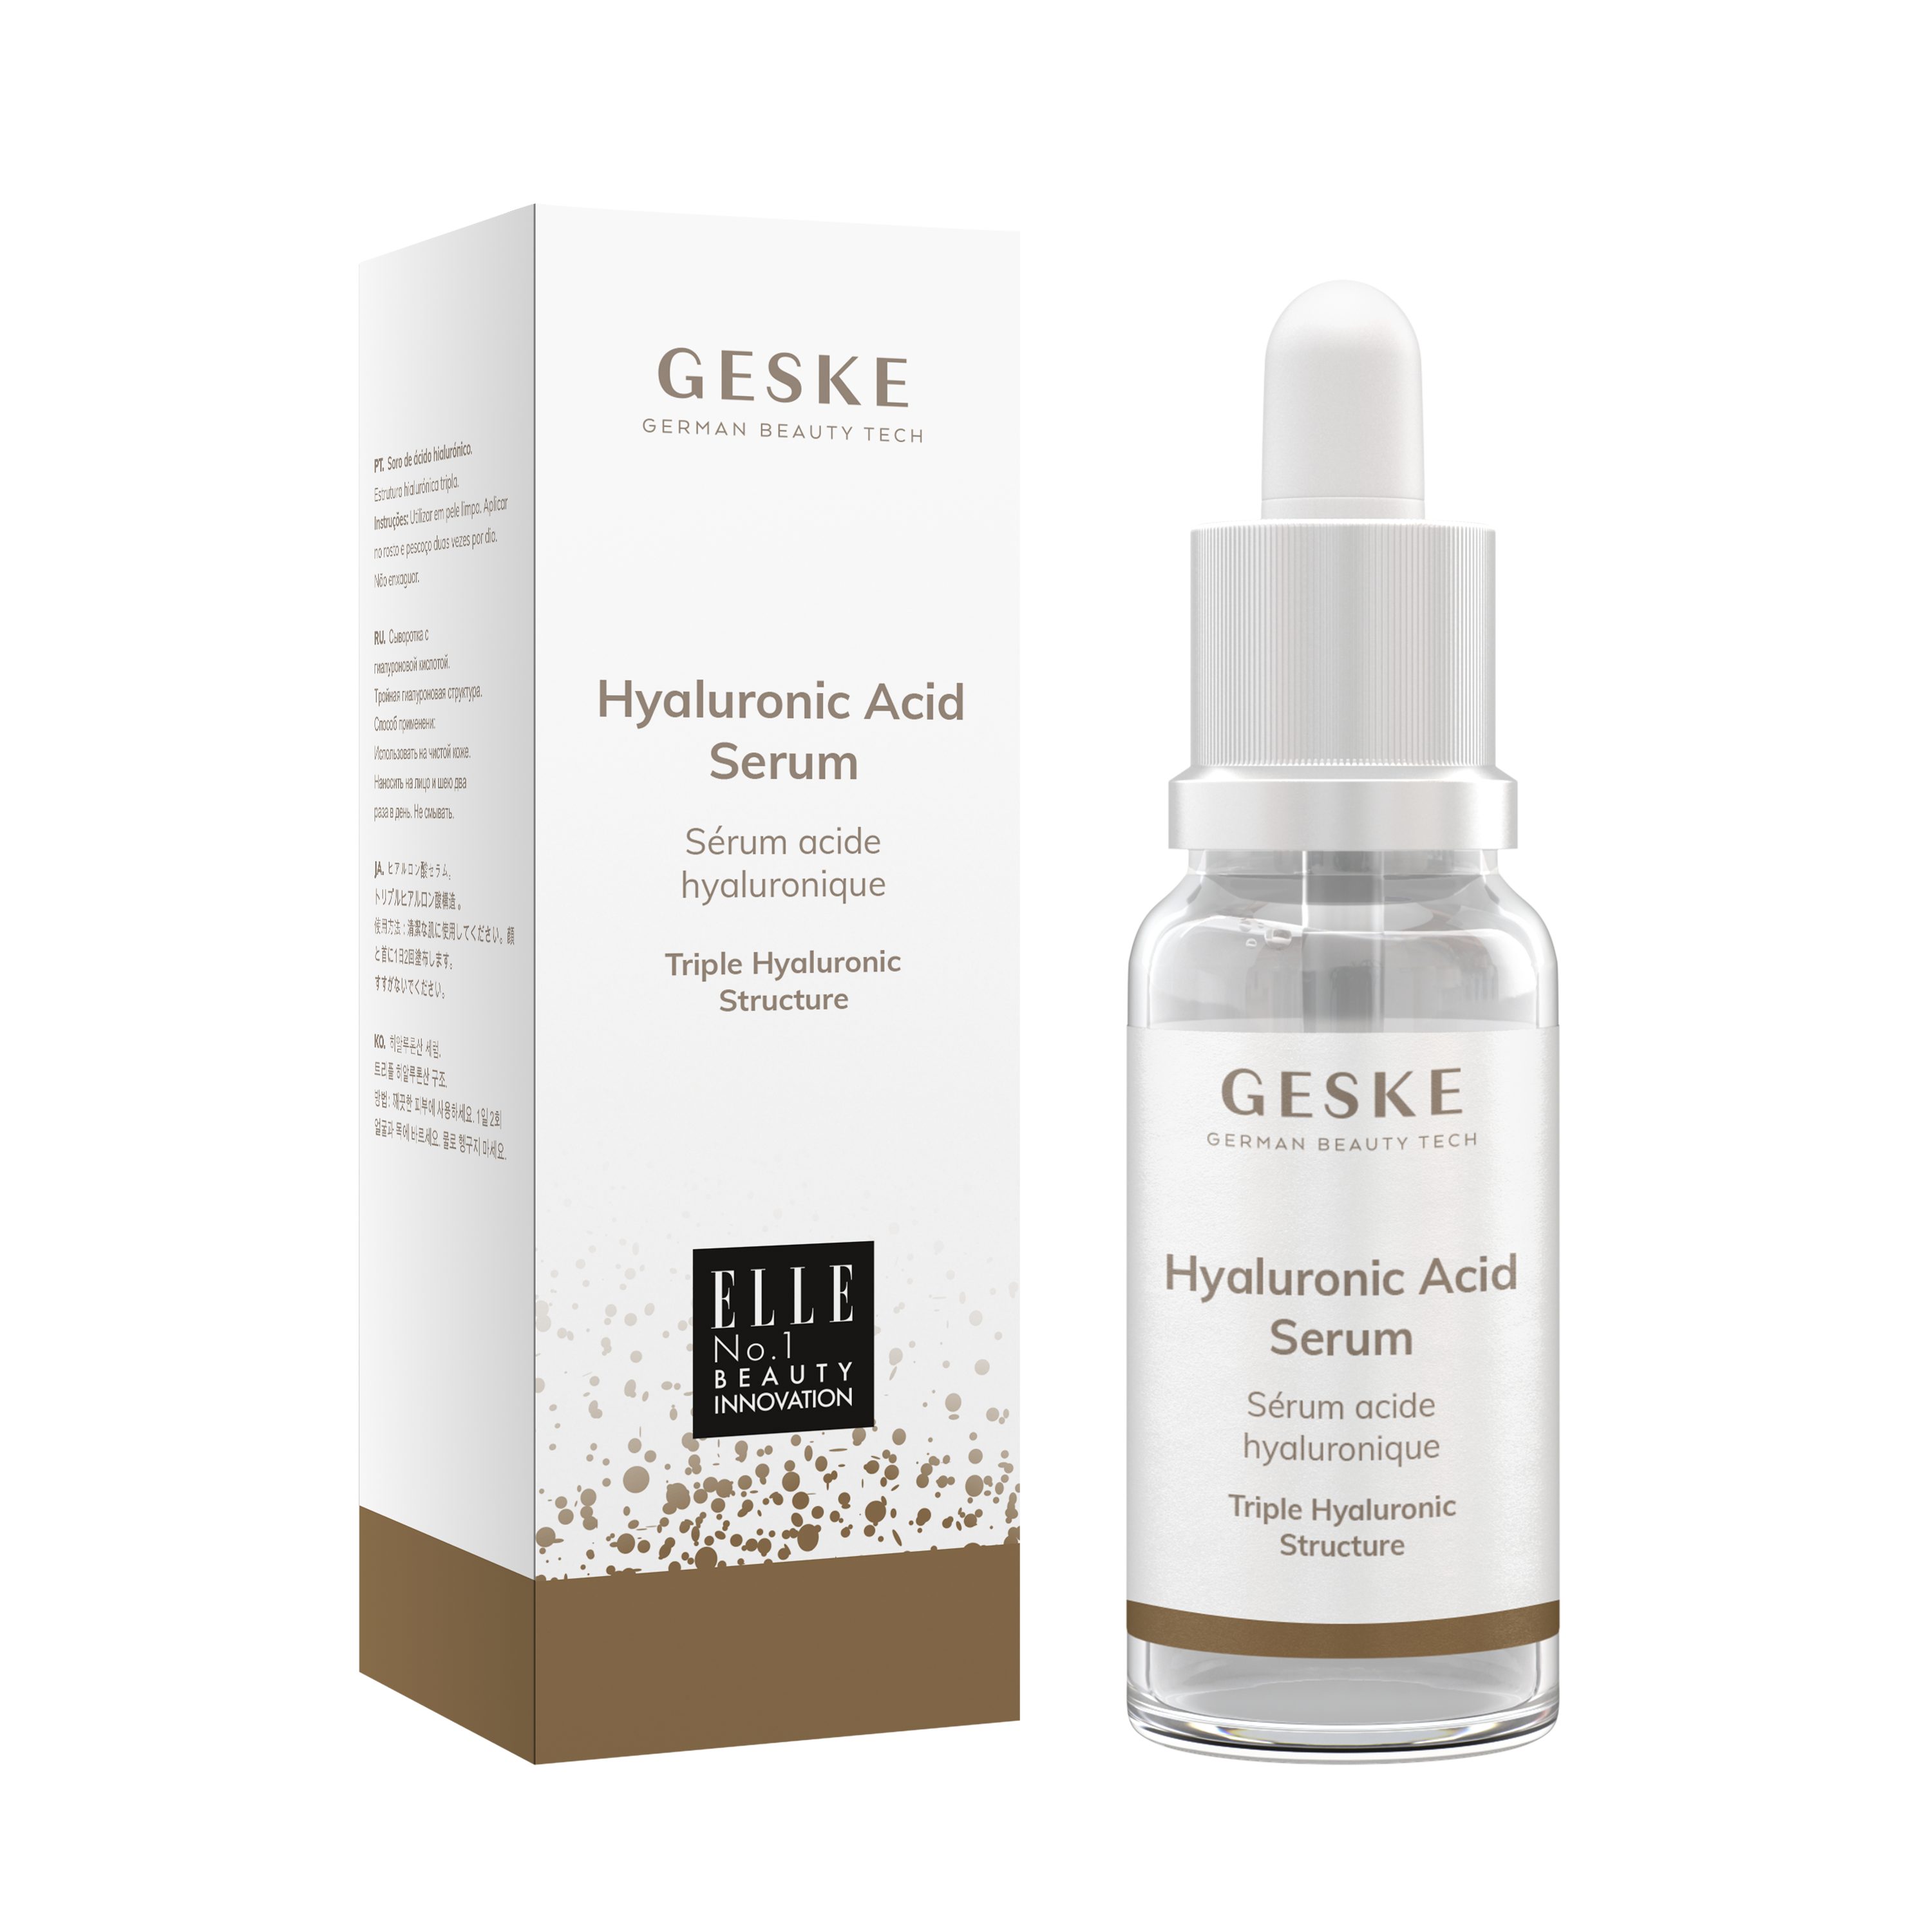 1-tlg. Serum, Tech Beauty Gesichtsöl Hyaluronic Acid GESKE German